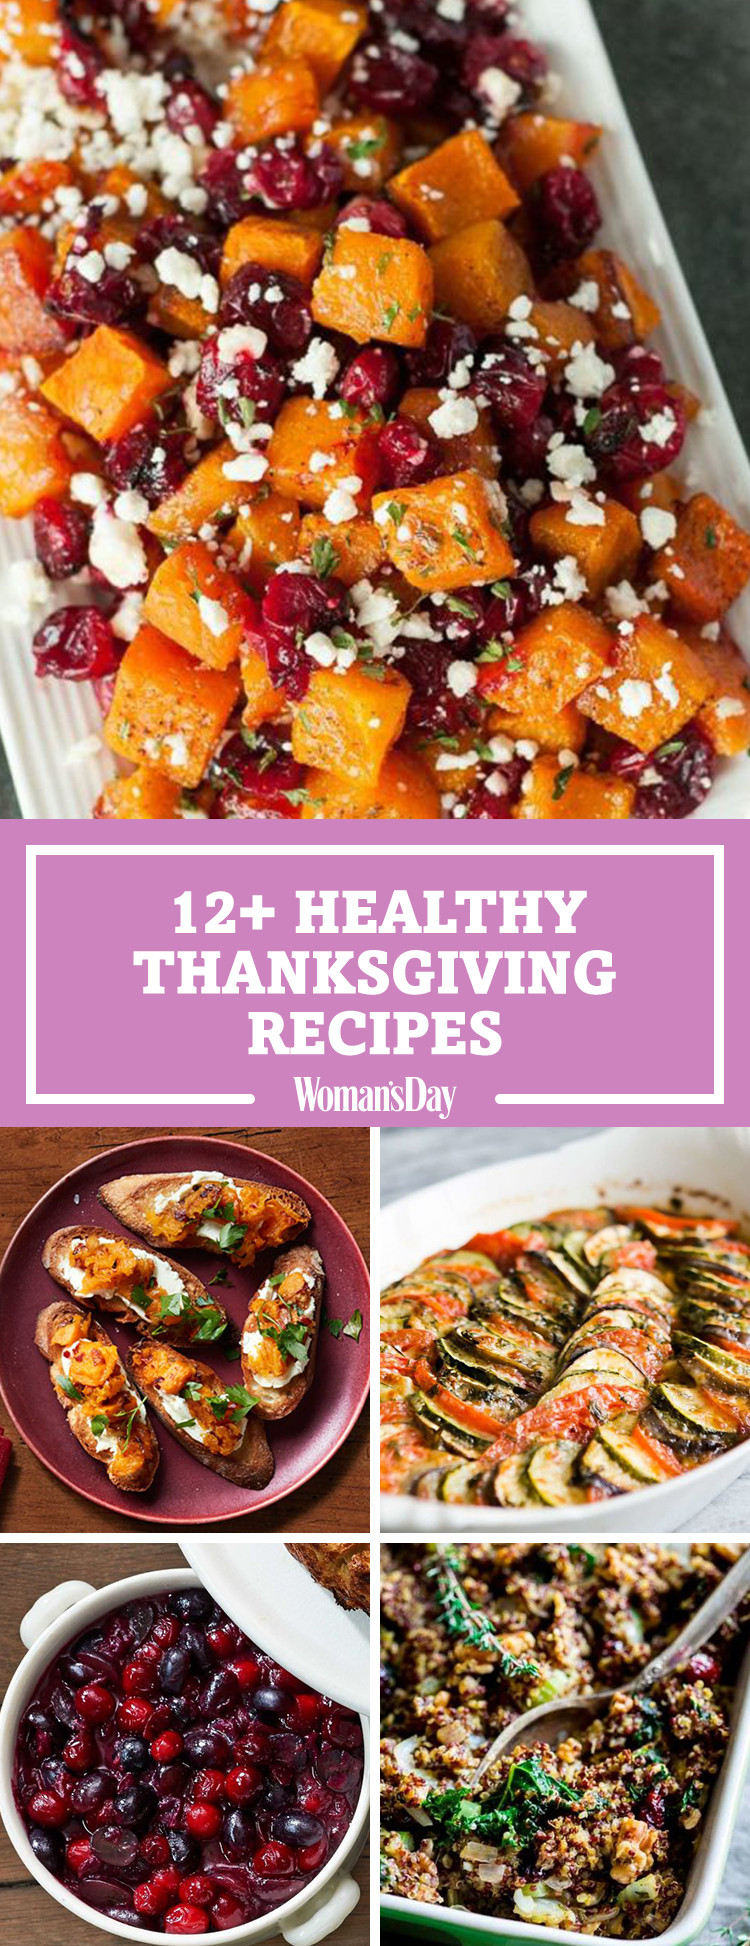 Healthy Thanksgiving Turkey Recipes
 16 Healthy Thanksgiving Dinner Recipes Healthier Sides